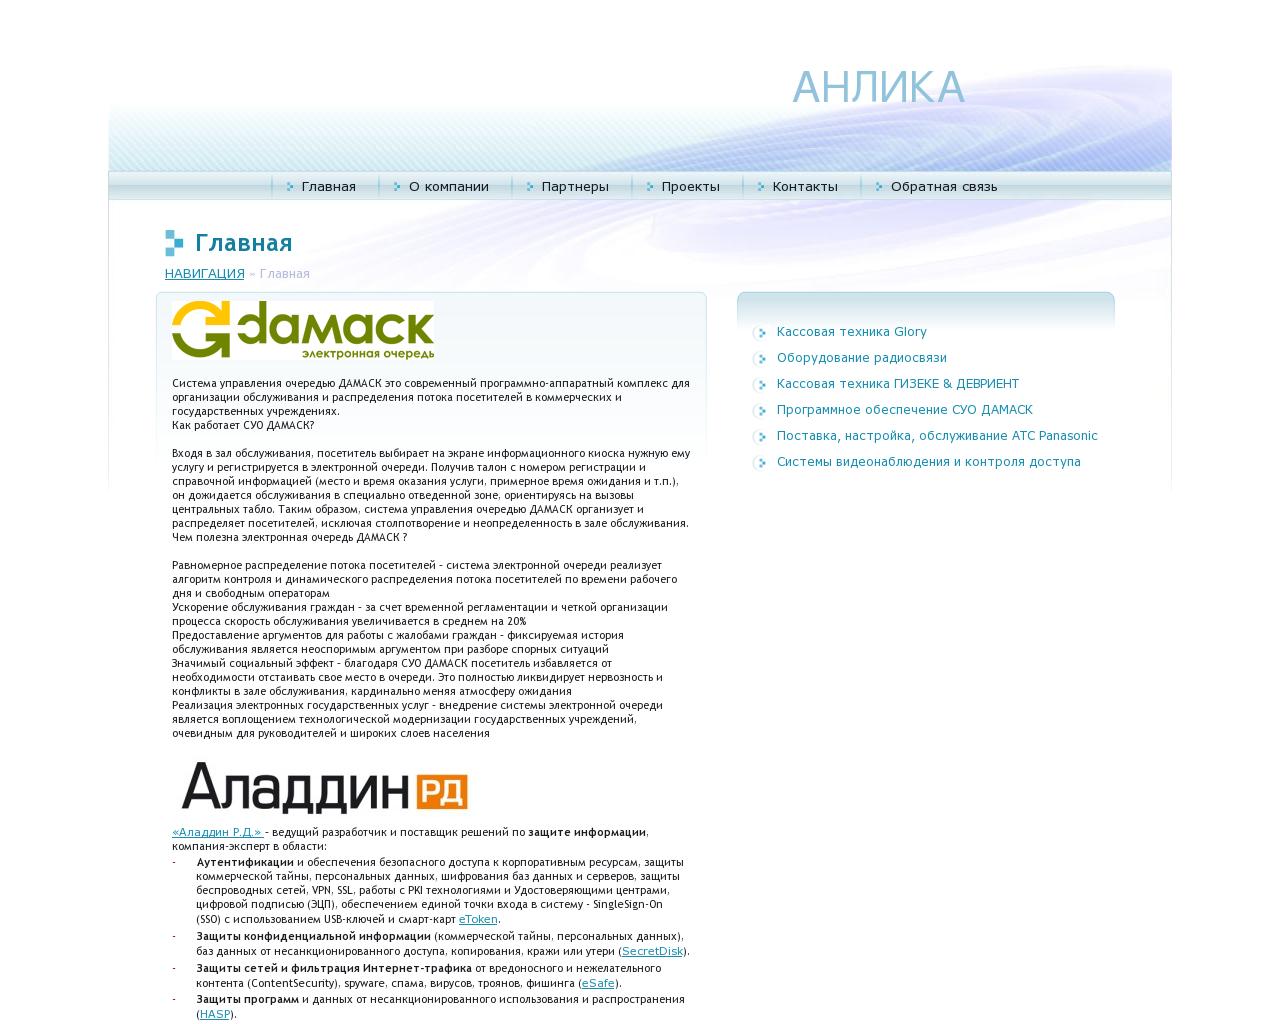 Изображение сайта anlika.ru в разрешении 1280x1024